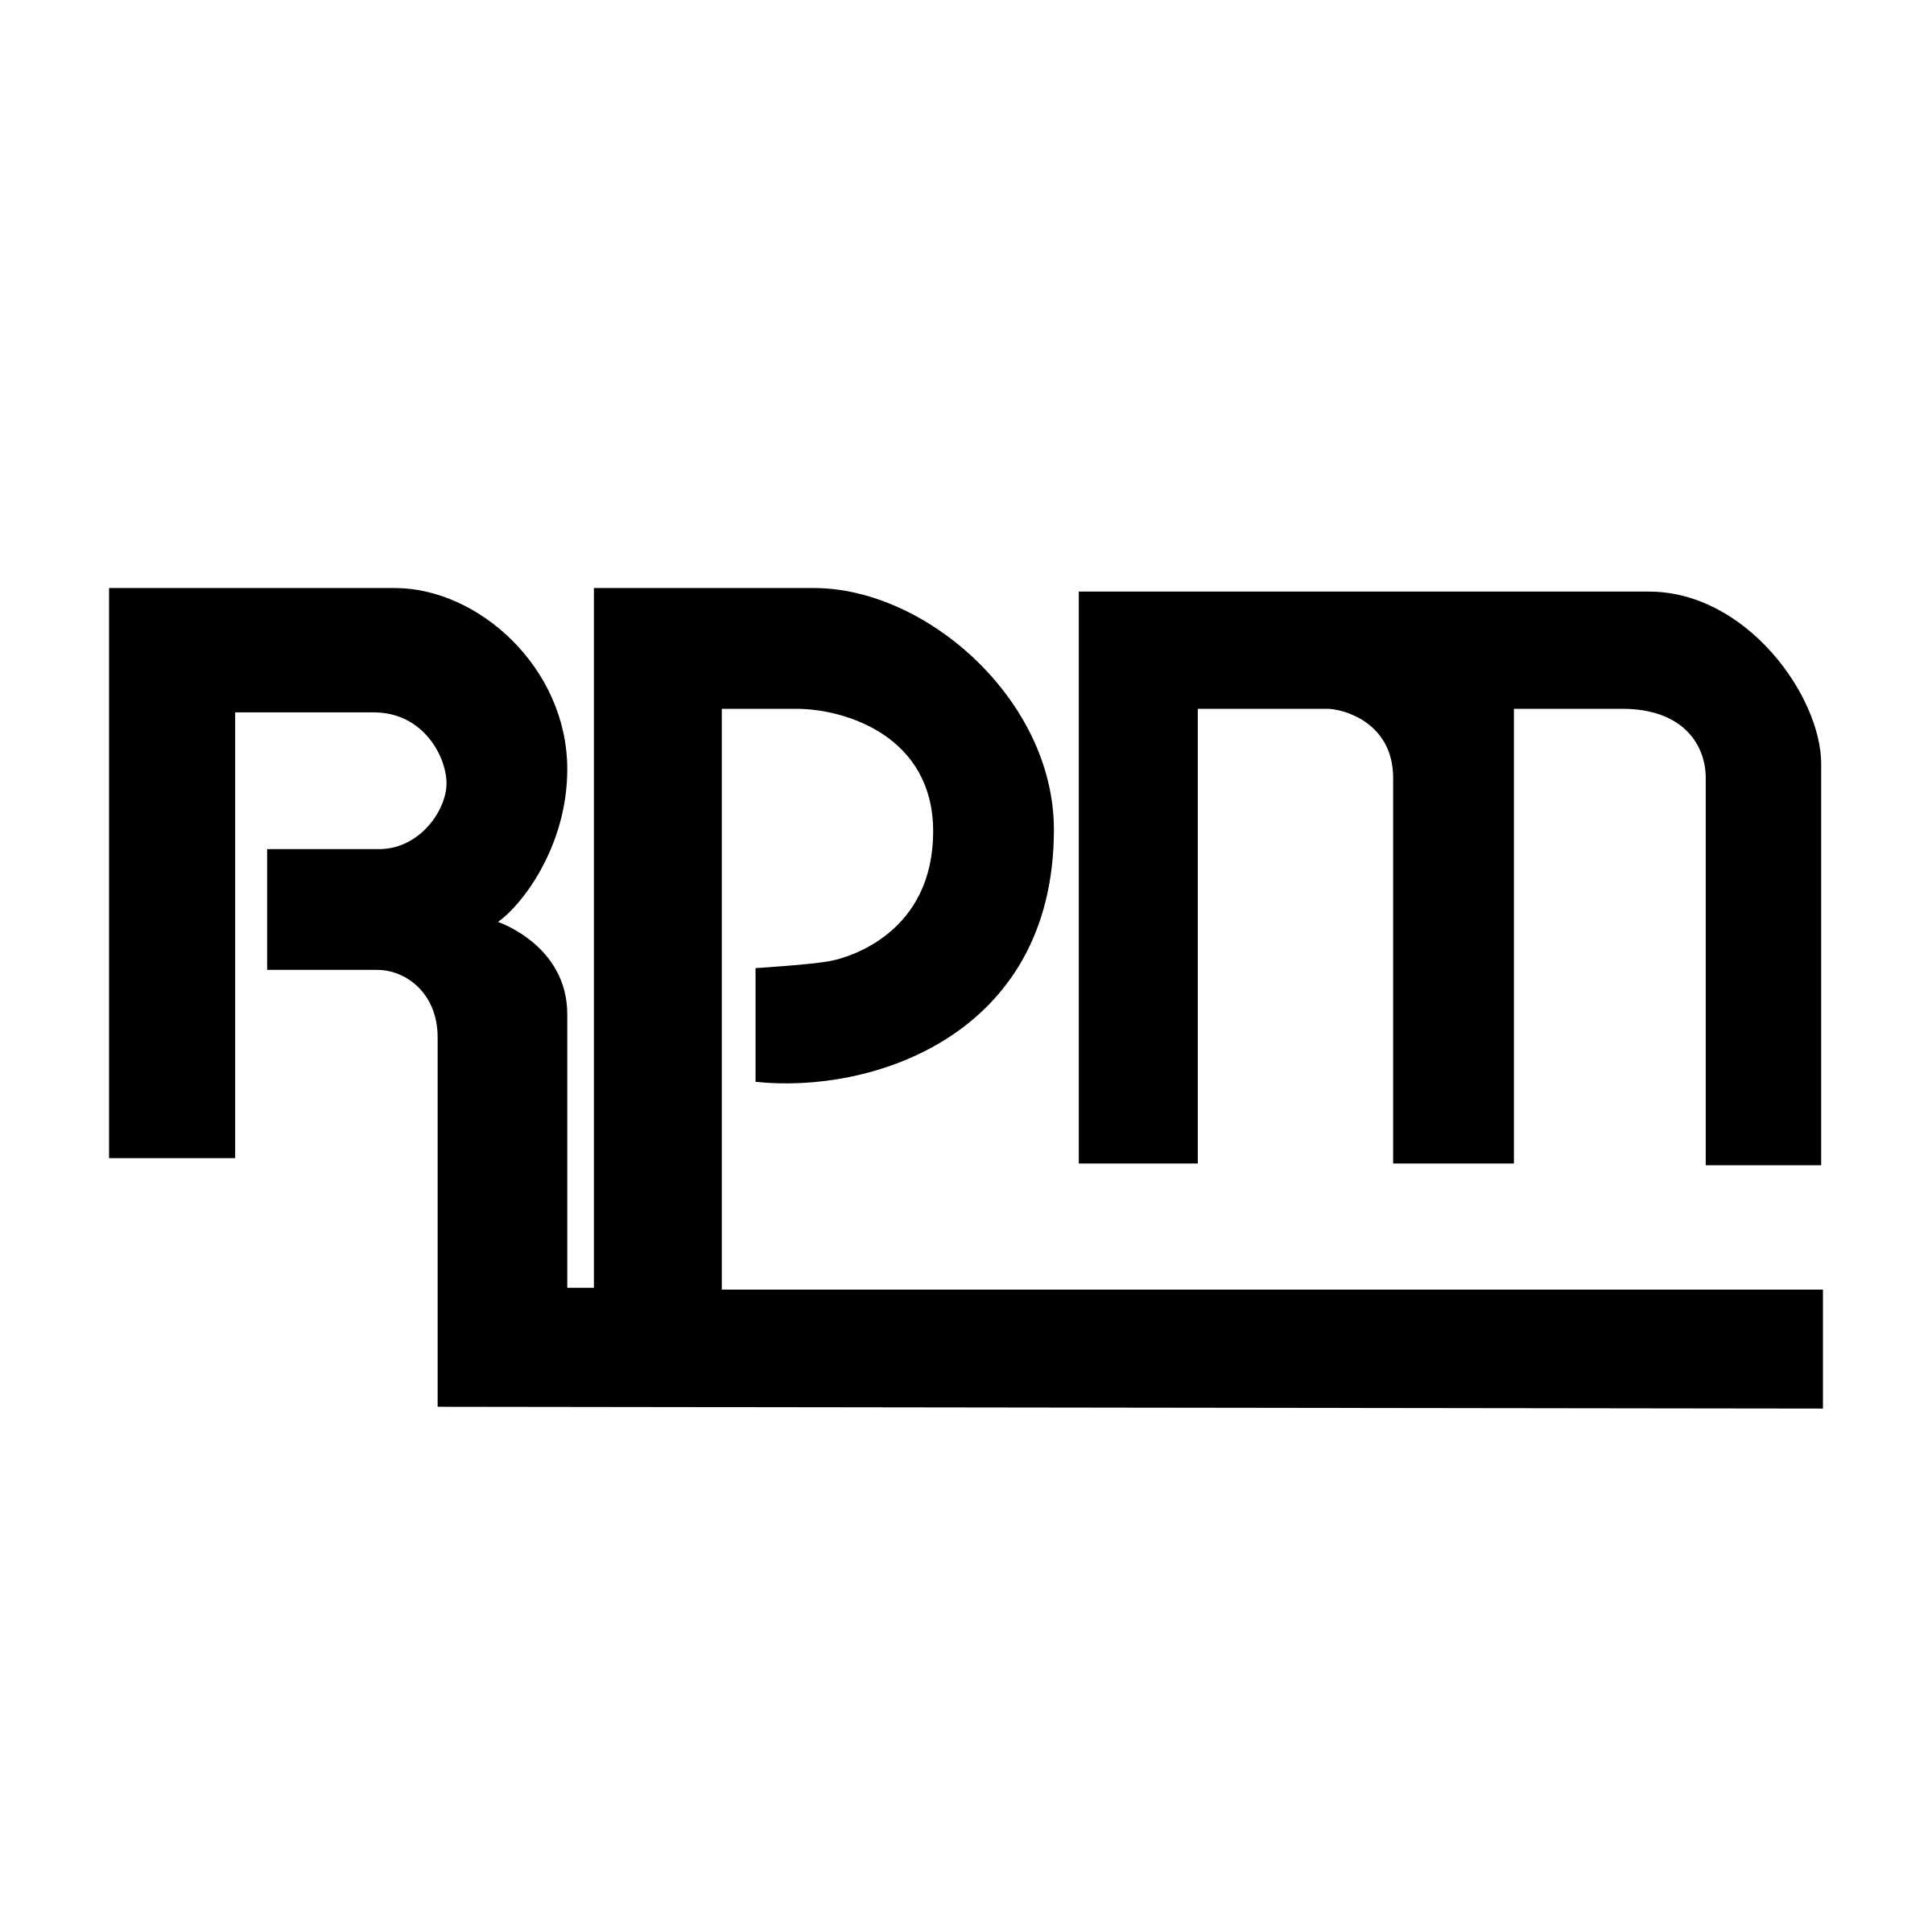 RPM Logo - RPM Logo PNG Transparent & SVG Vector - Freebie Supply